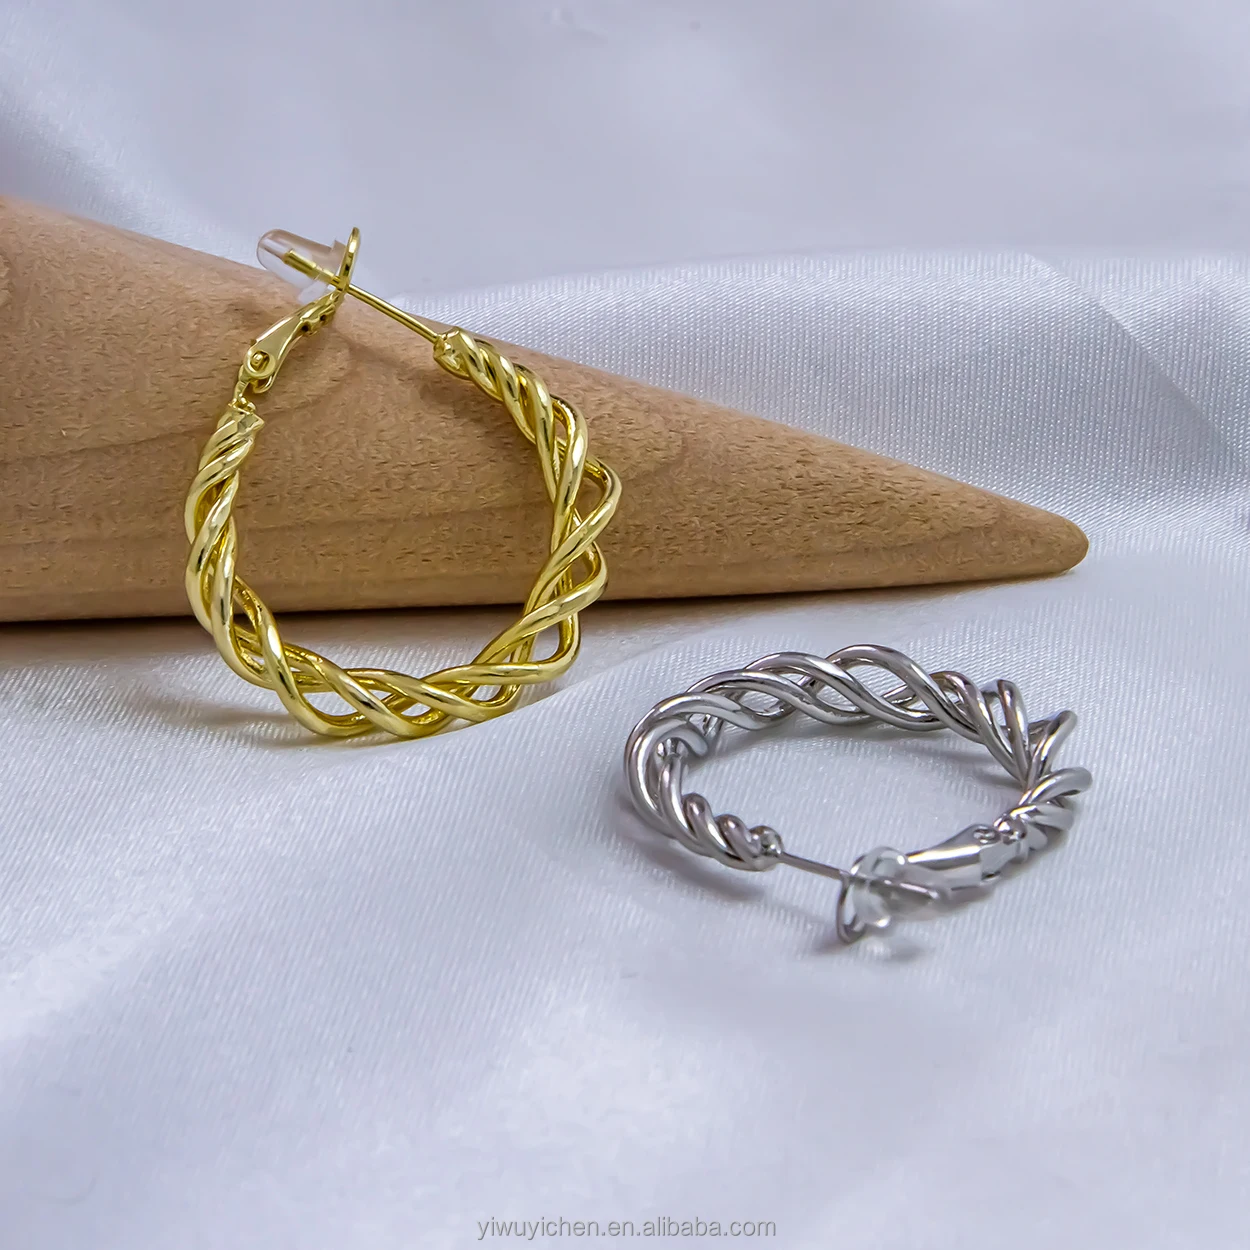 

E8662 Retro Metal 18k Gold Plated Large Huggie Earrings Geometric Twisted Hoop Earrings for Women, Yellow & silver